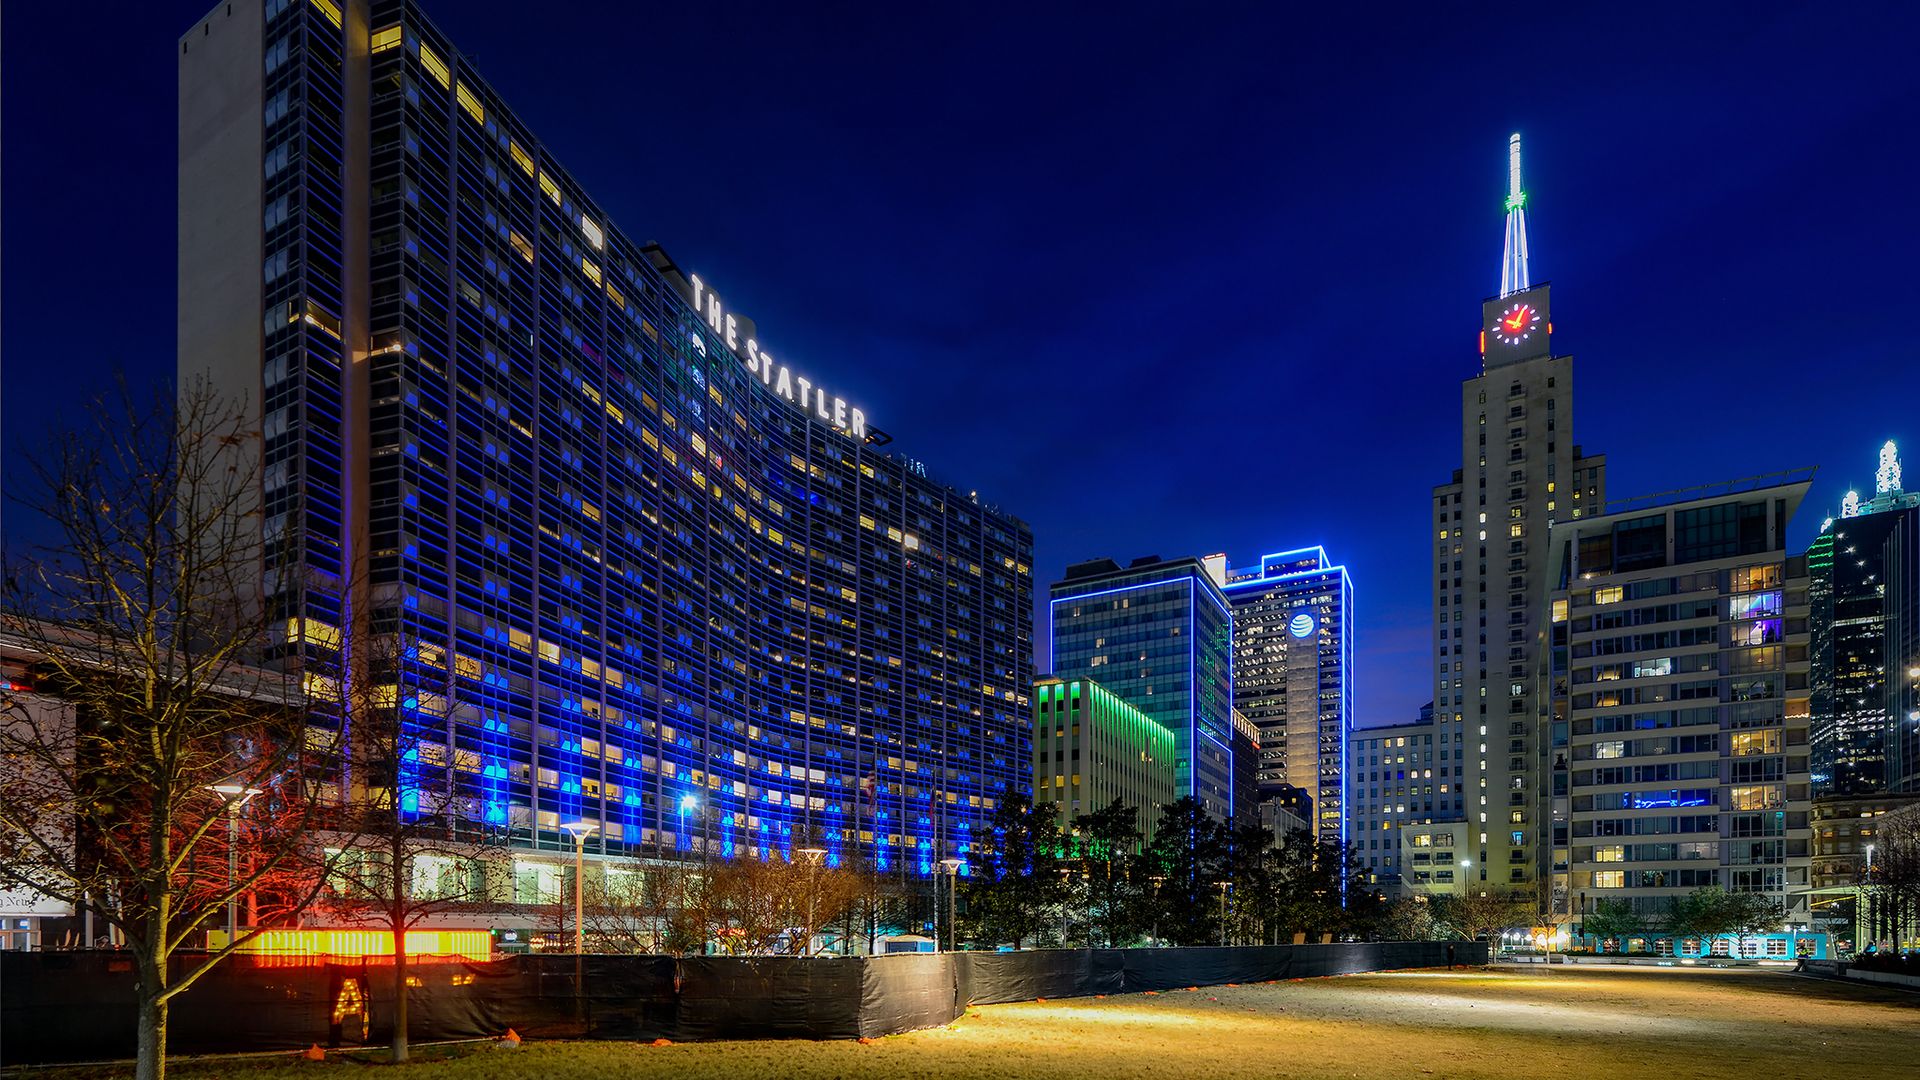 The Statler Hotel in Dallas, at night